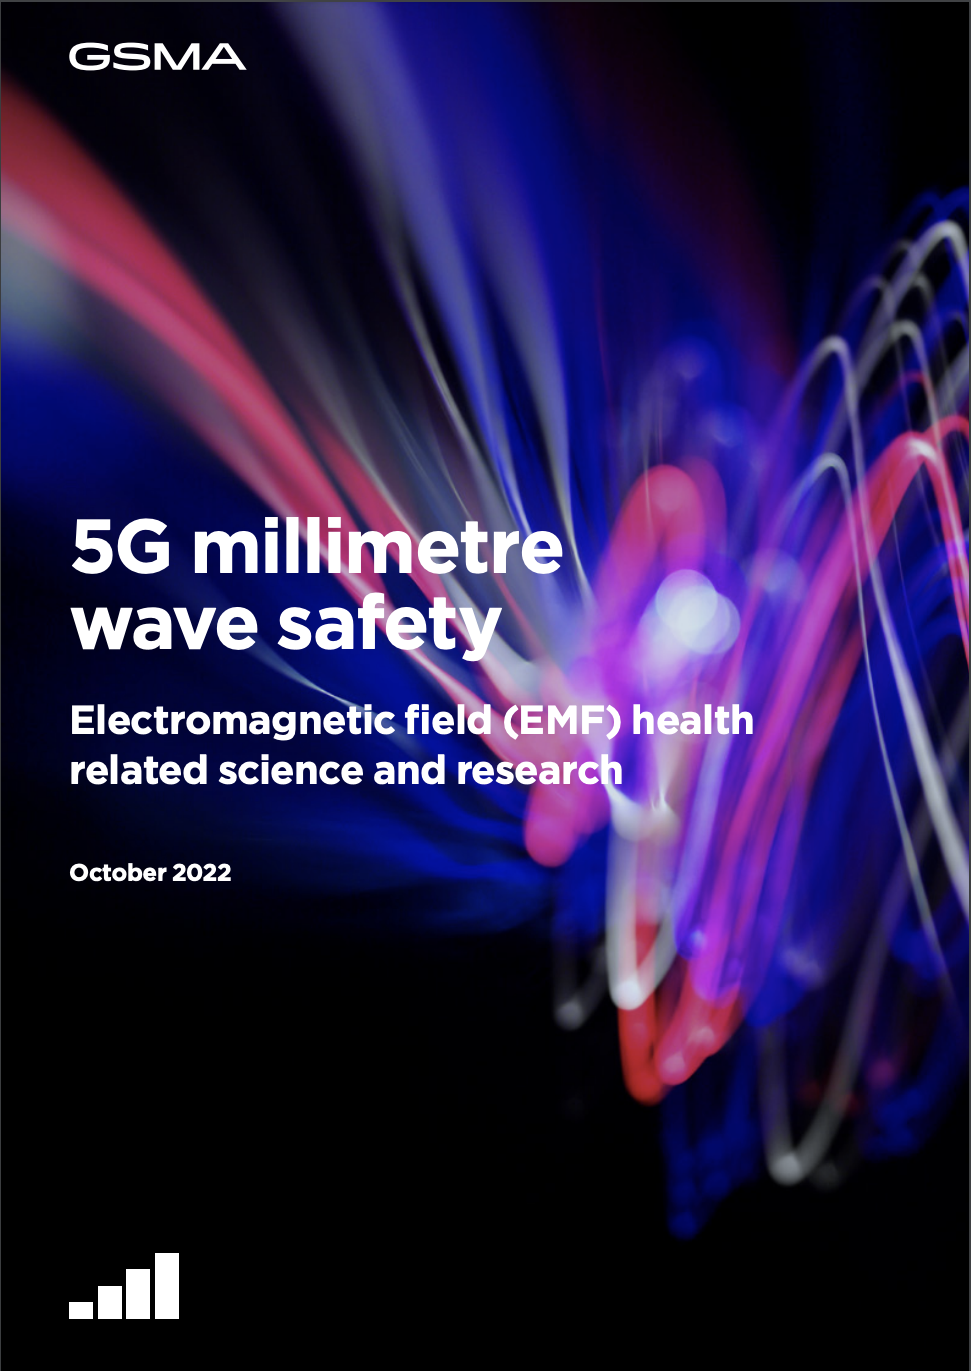 EMF safety and 5G mmWave networks image